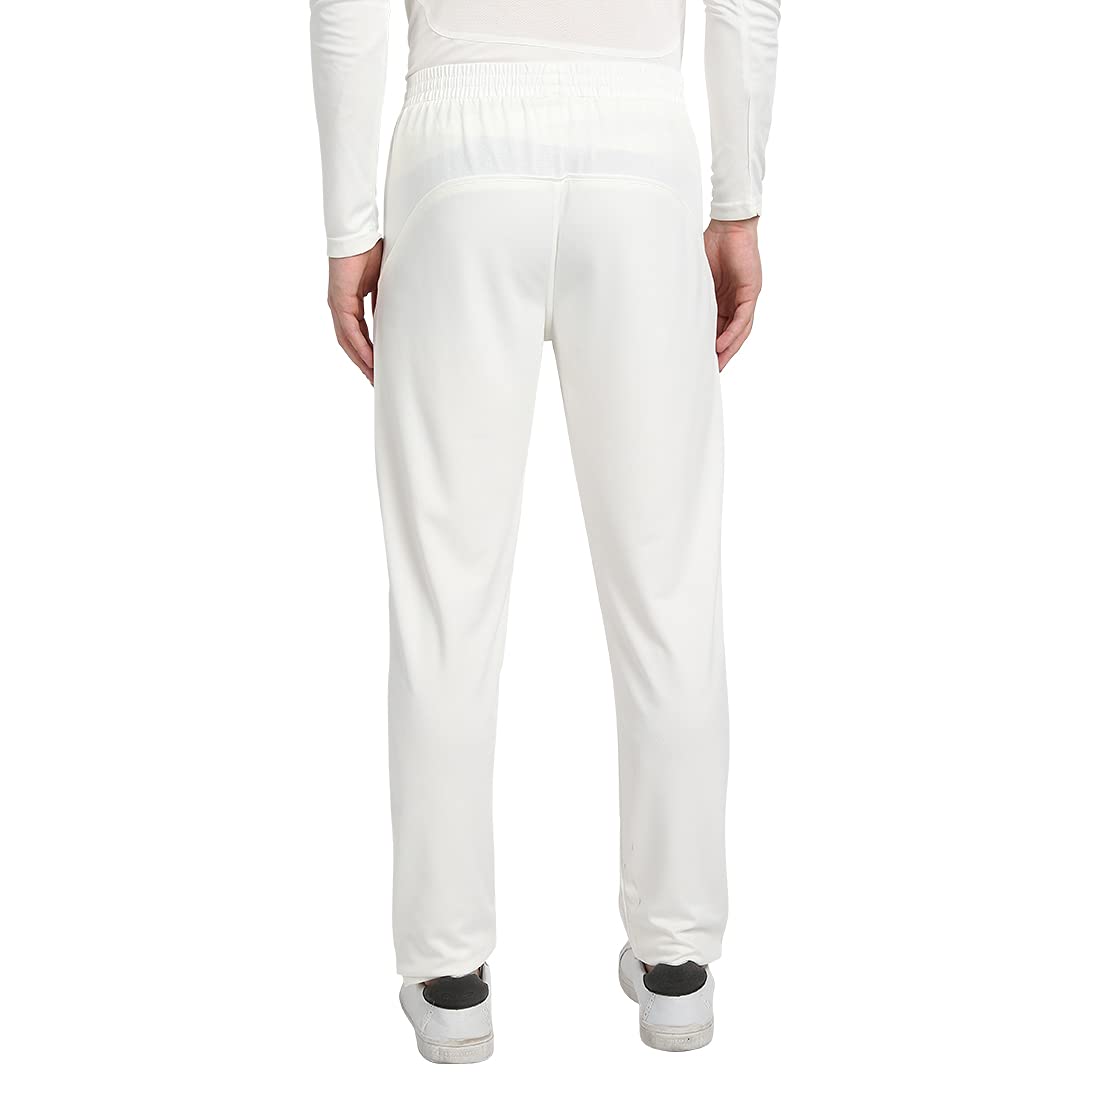 Shrey Cricket Premium Trouser - Best Price online Prokicksports.com